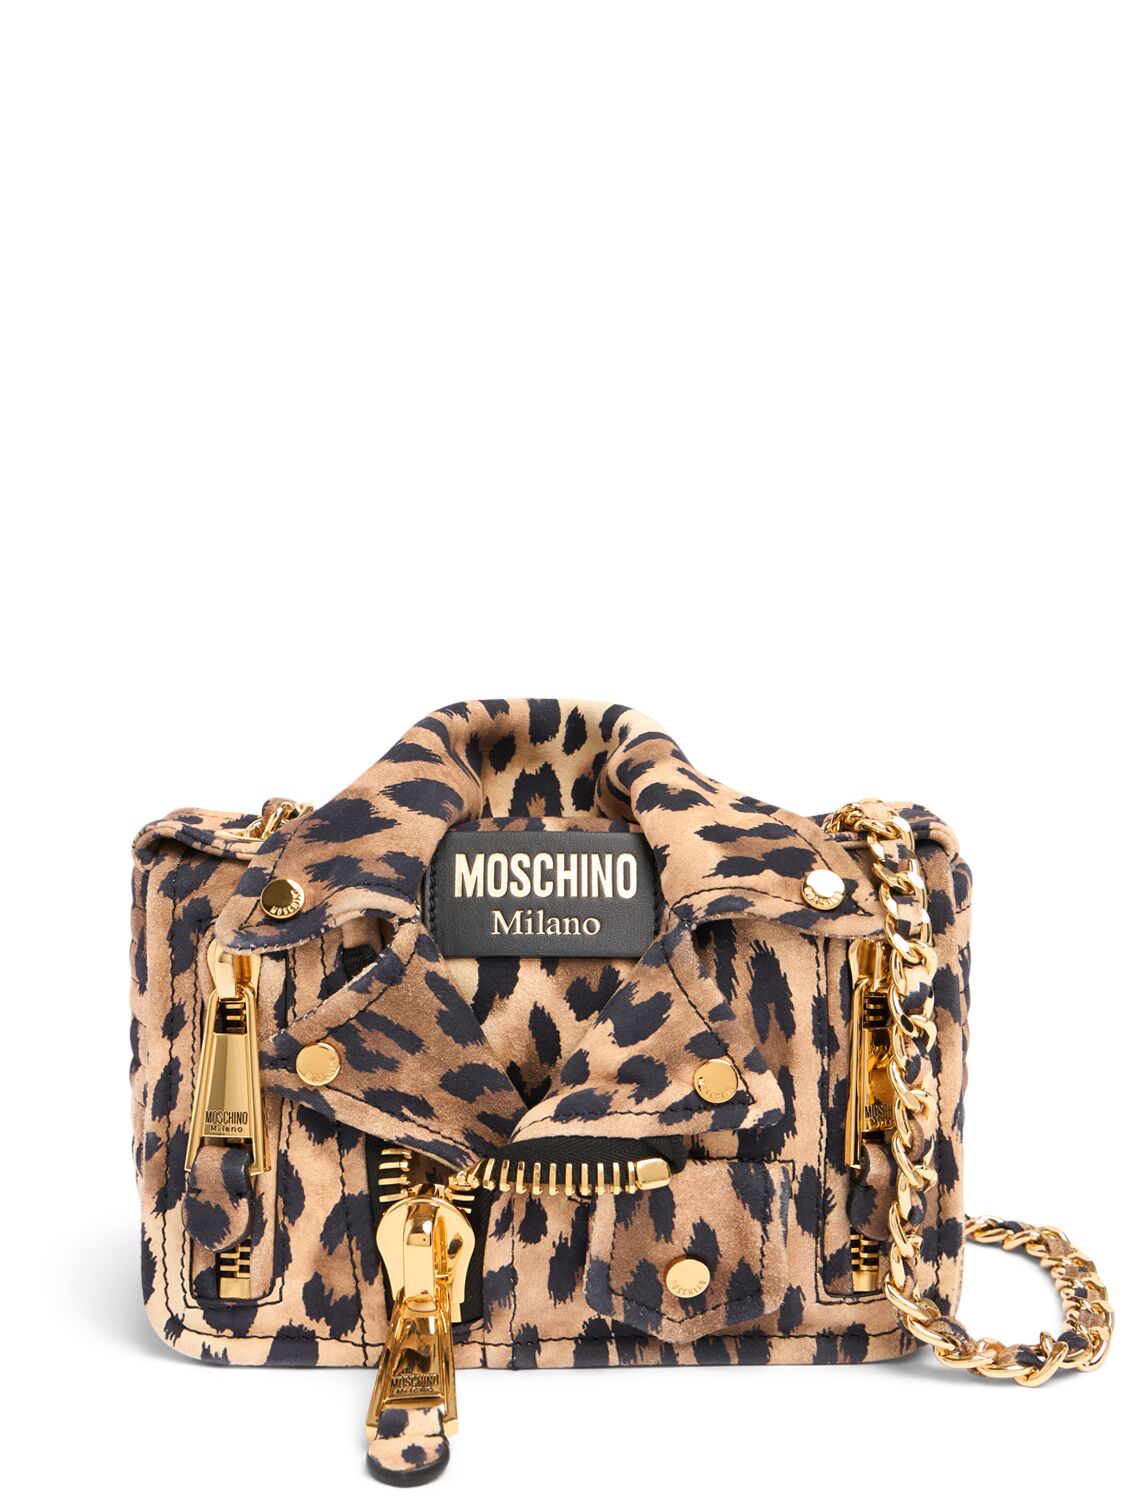 Moschino Biker Printed Suede Shoulder Bag In Leopard